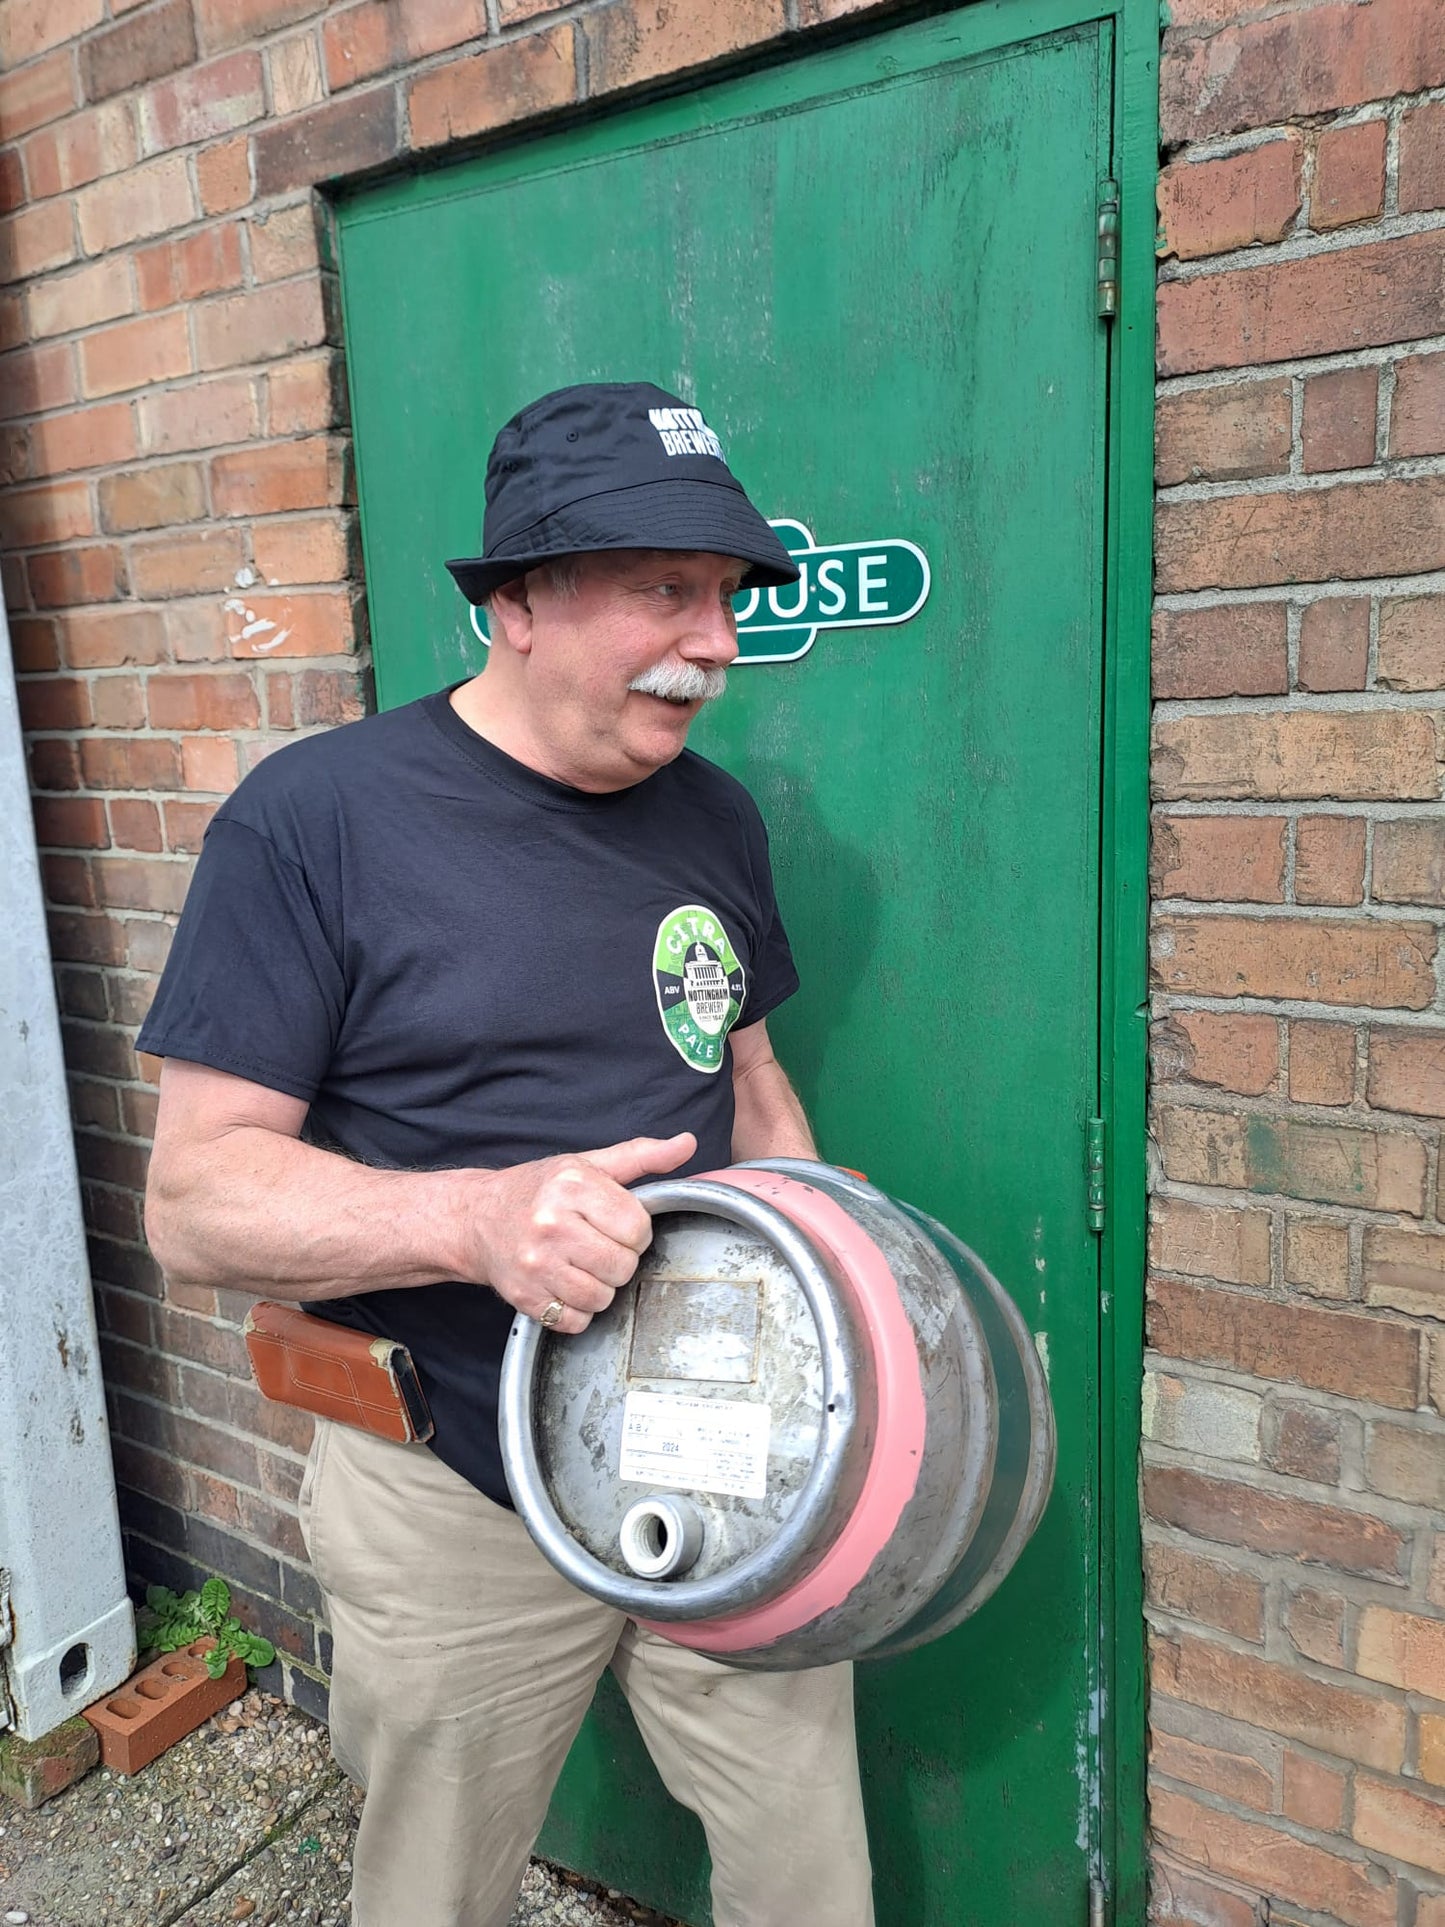 Nottingham Brewery Hat